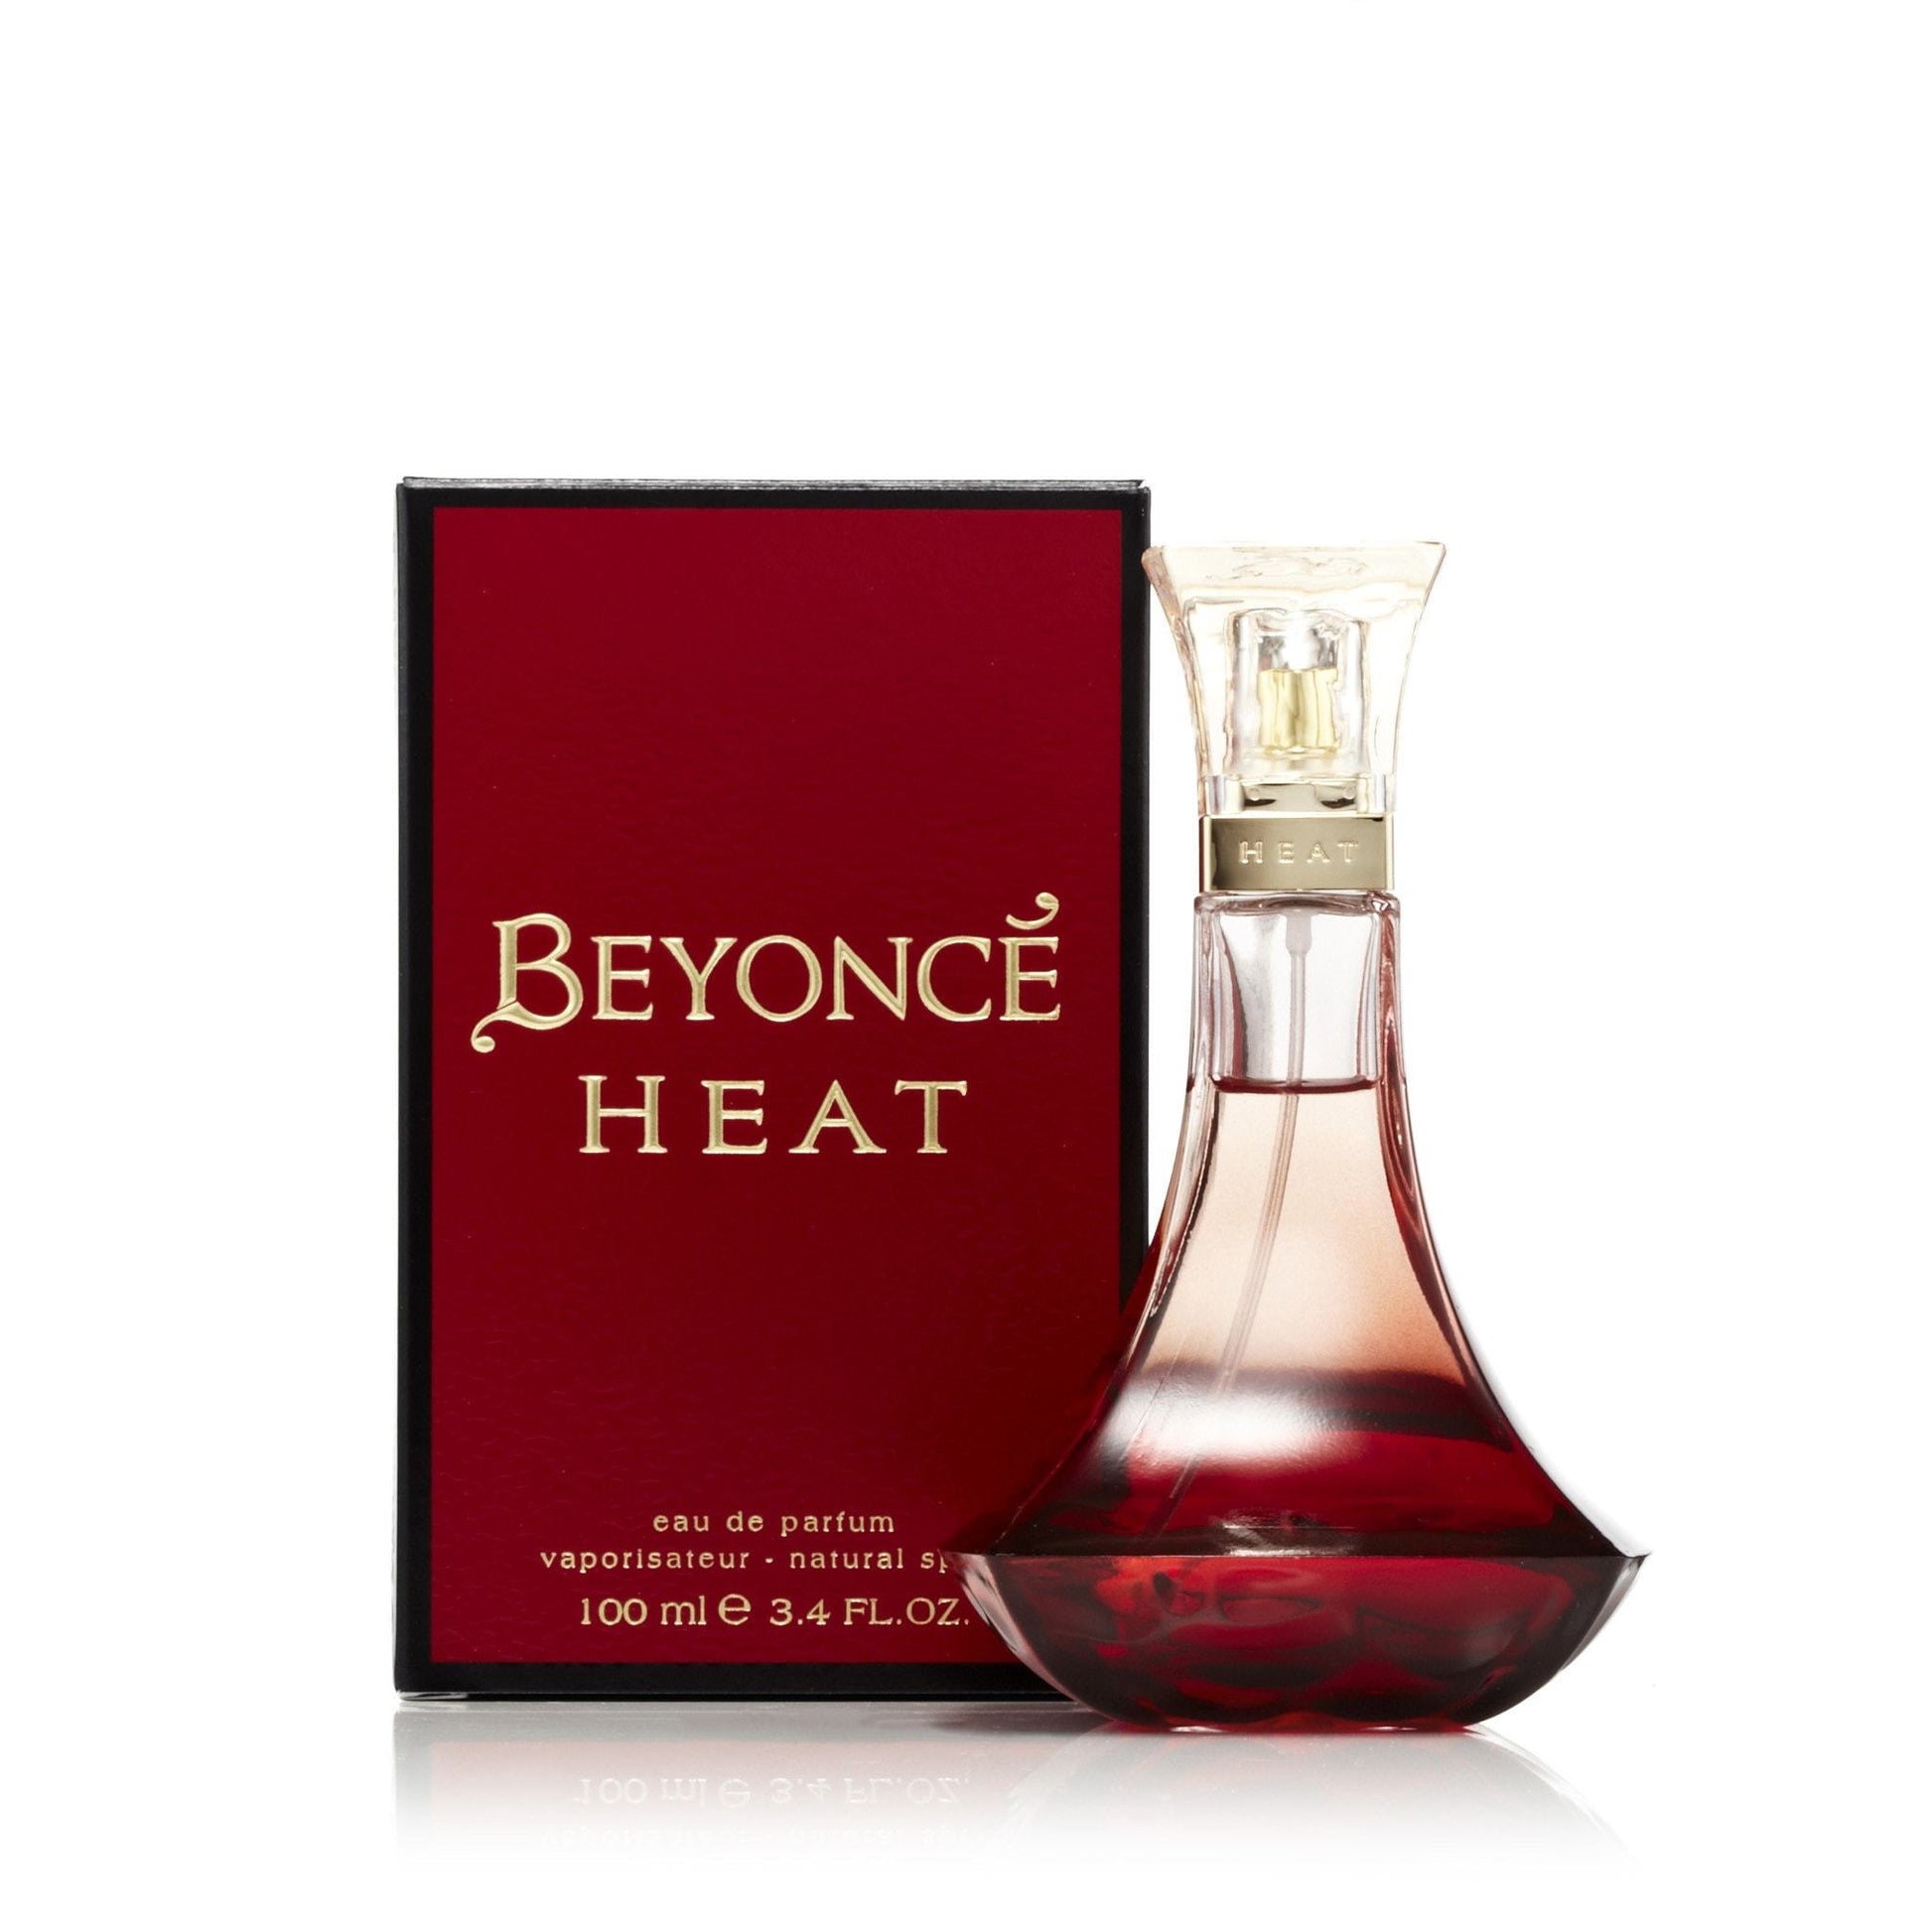 Beyonce Heat Eau de Parfum Spray for Women by Beyonce, Product image 1